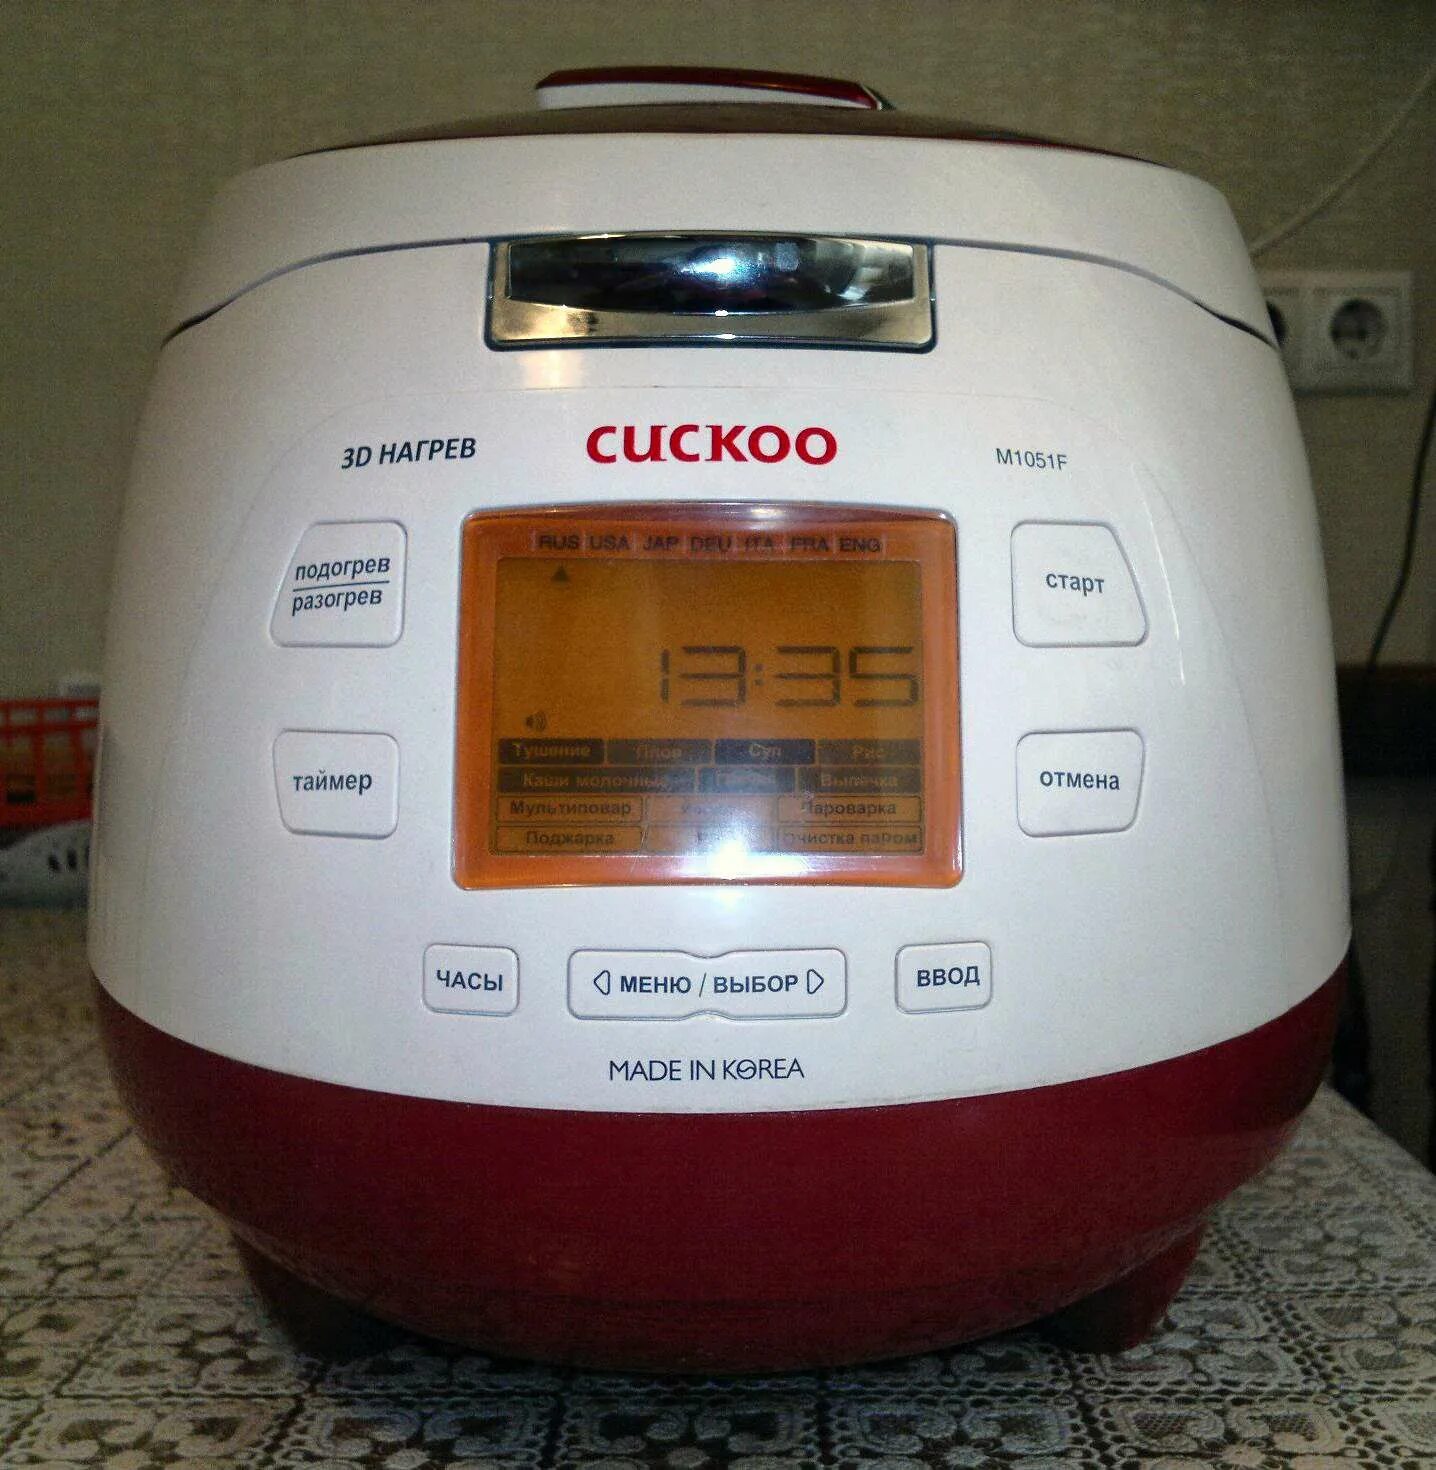 Мультиварка cuckoo купить. Cuckoo m1051f. Cuckoo CMC-m1051f. Чаша для мультиварки Cuckoo m1051f. Пароварка Cuckoo CMC 1051f.